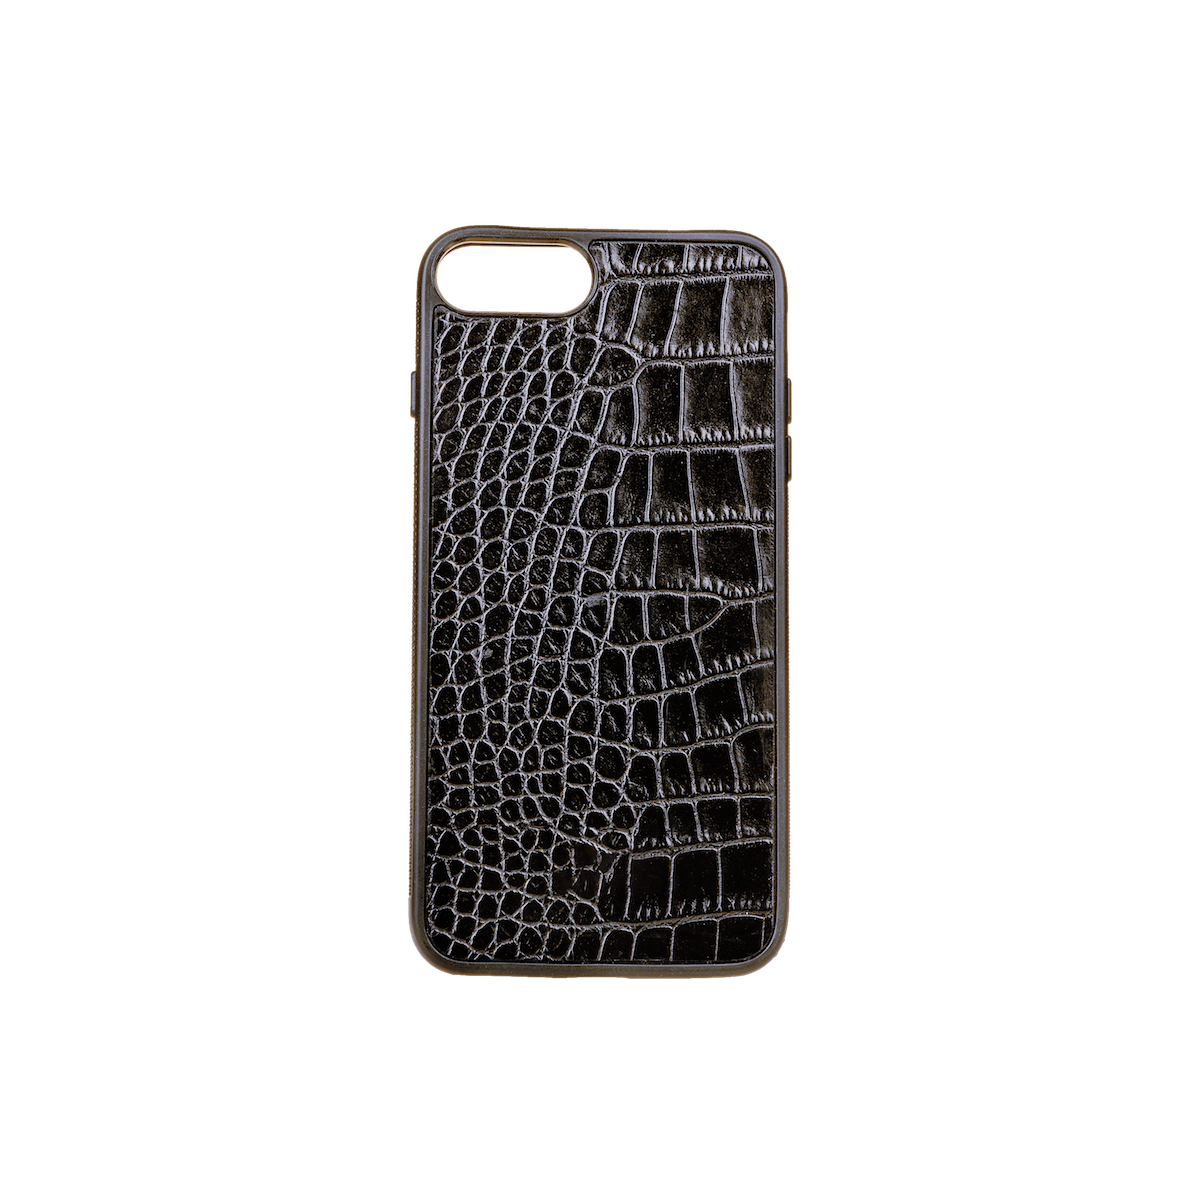 Iphone 7/8 Plus Case, Black Croco Leather, MAISON JMK-VONMEL Luxe Gifts